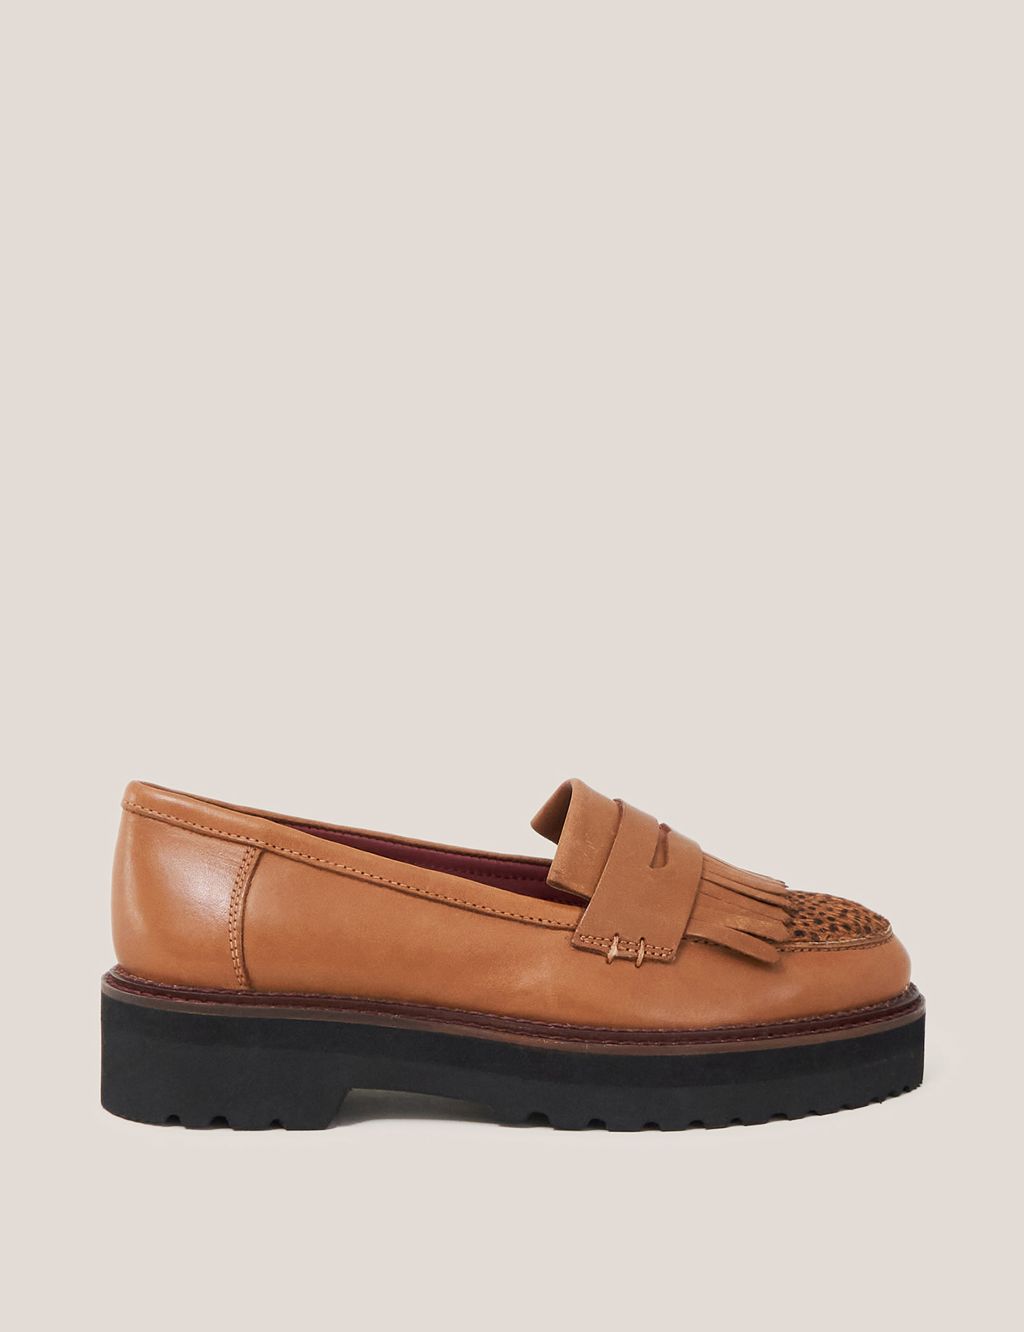 Leather Slip On Chunky Flatform Loafers image 1